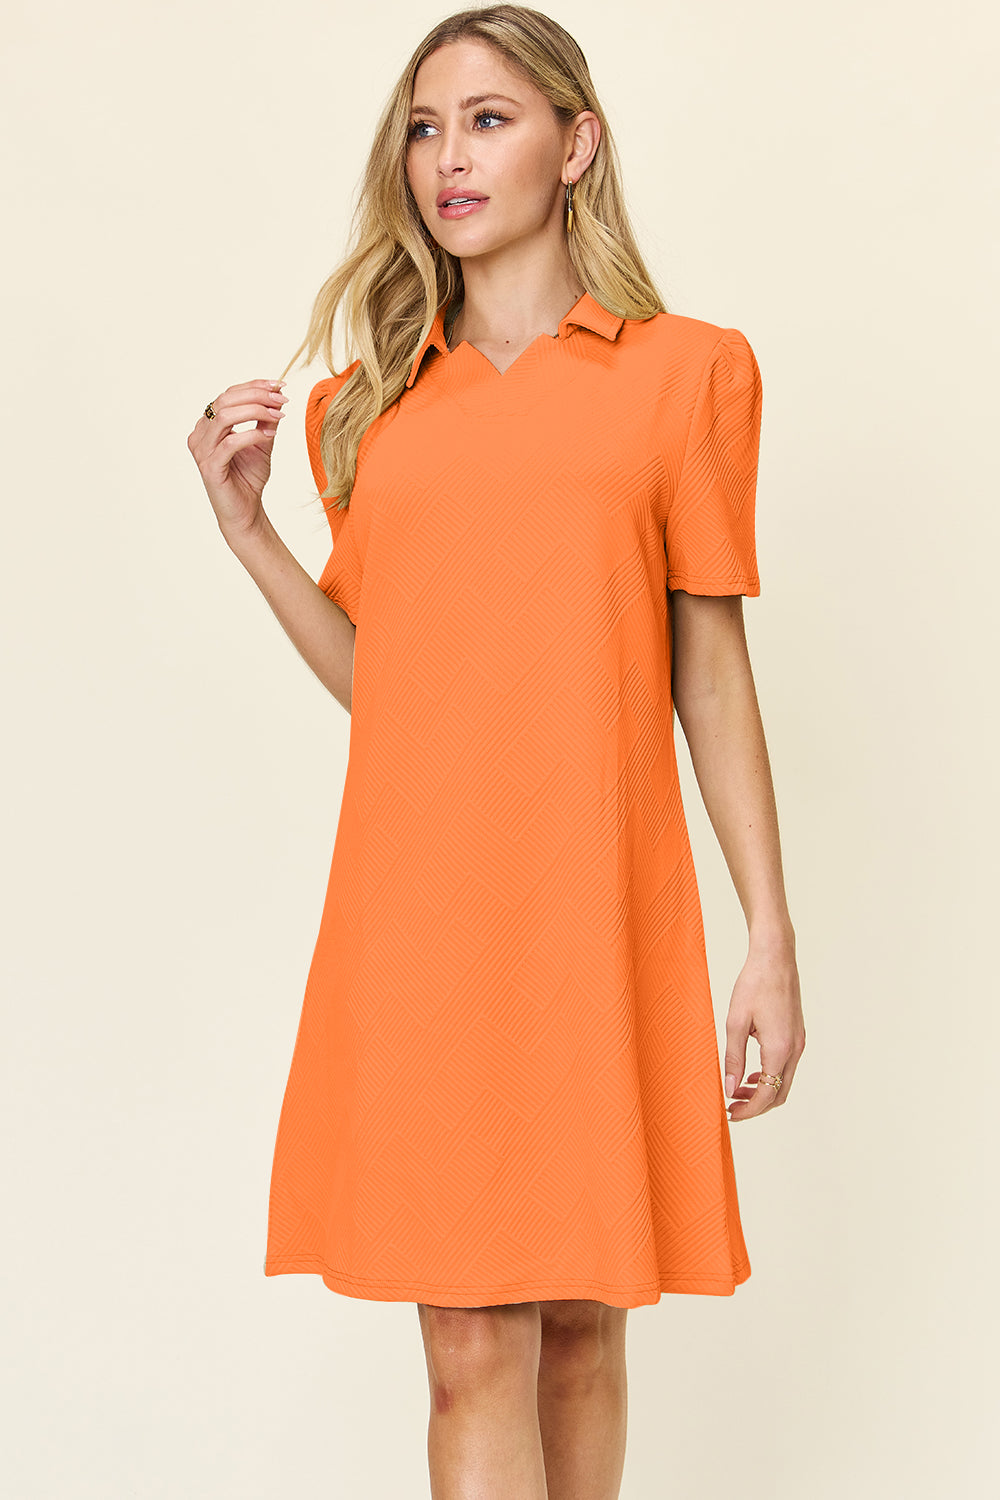 Double Take Full Size Texture Collared Neck Short Sleeve Dress Tangerine